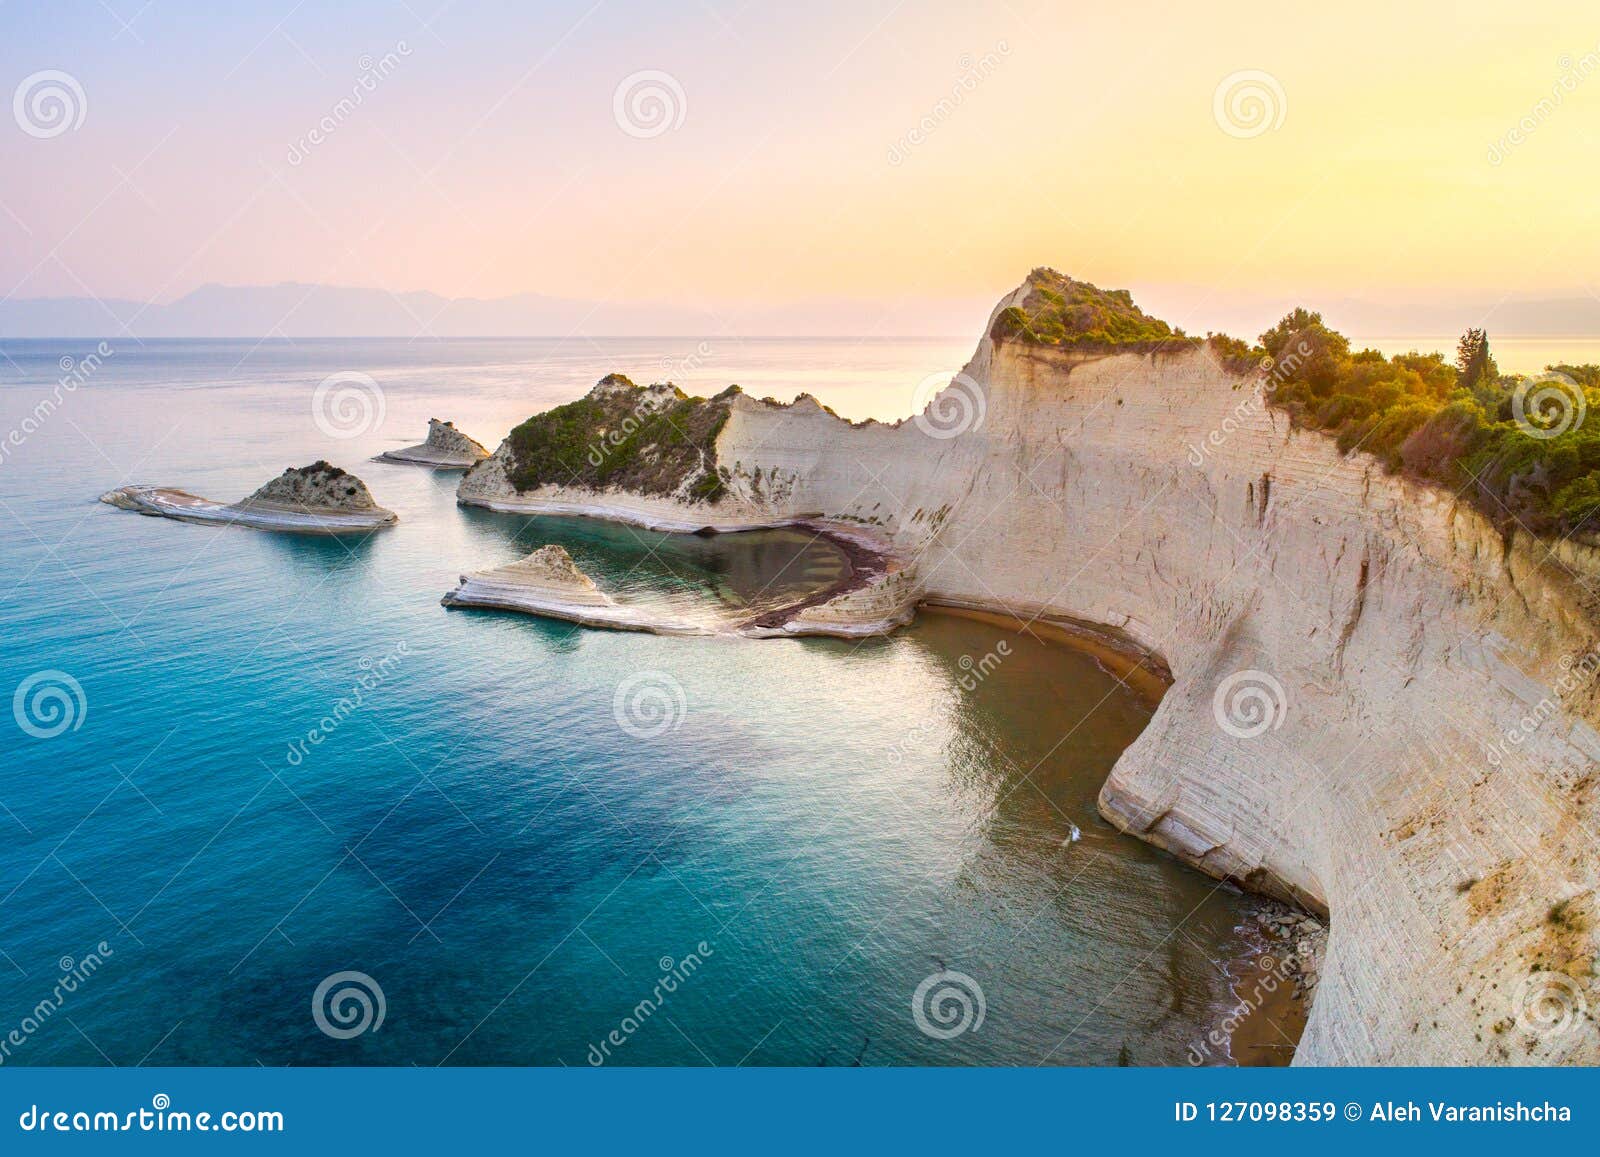 beautiful view of cape drastis in corfu in greece